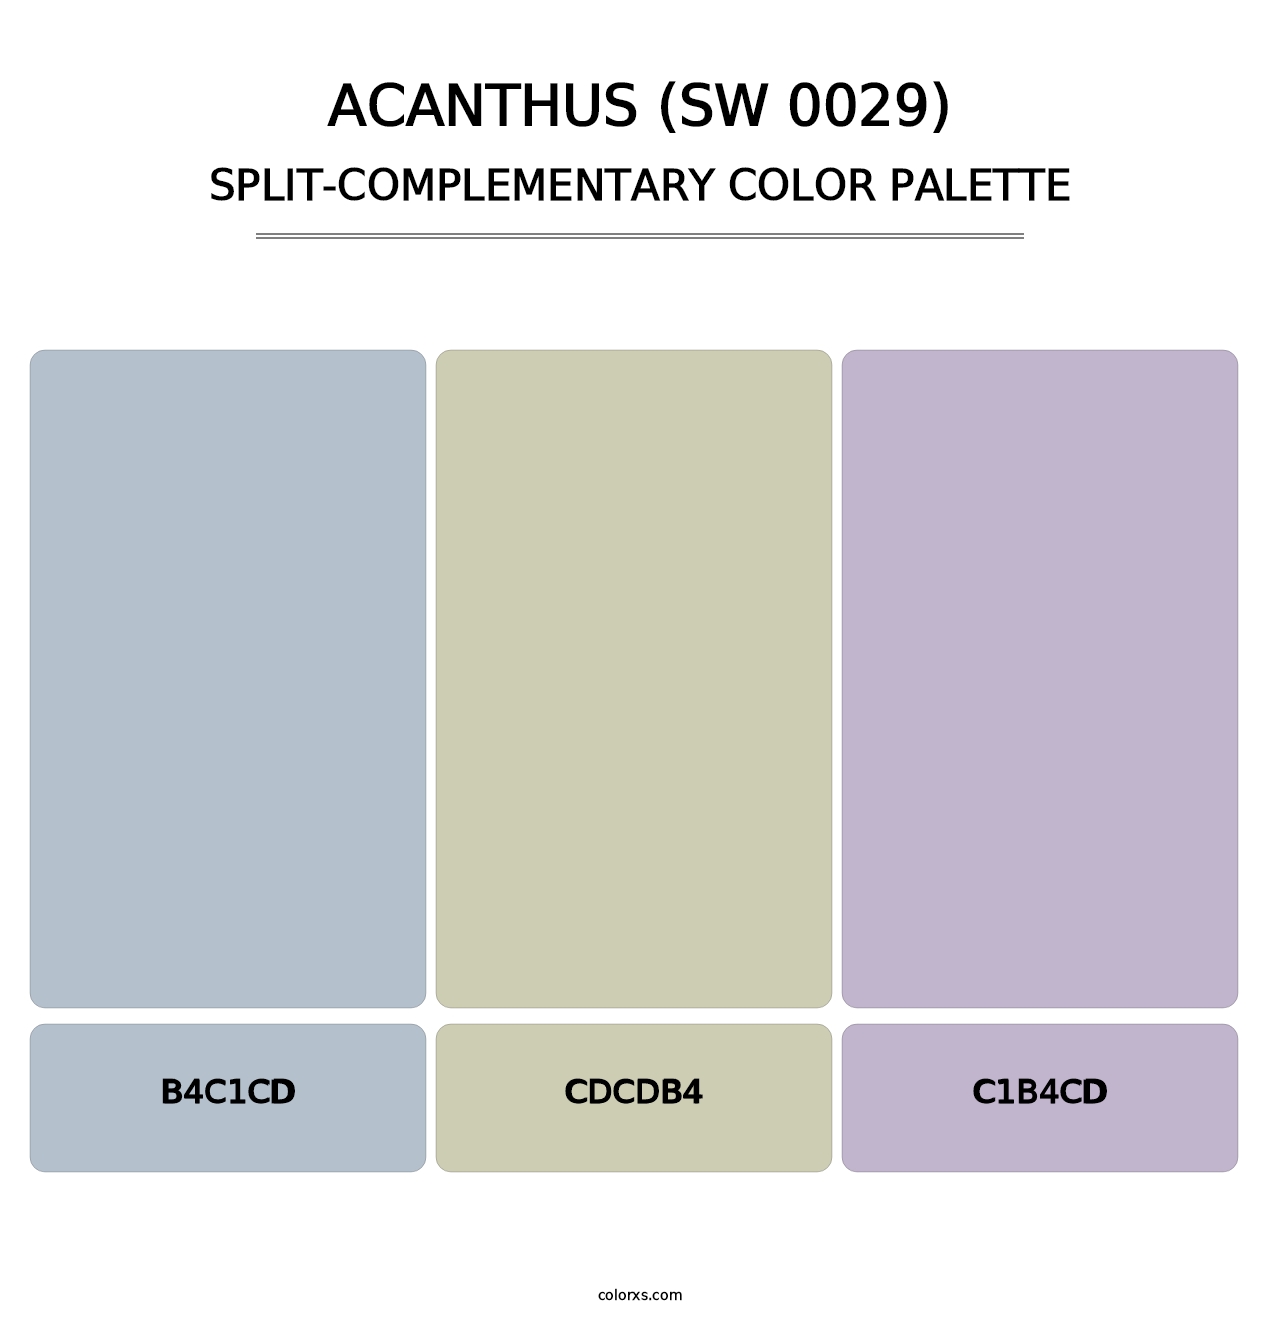 Acanthus (SW 0029) - Split-Complementary Color Palette